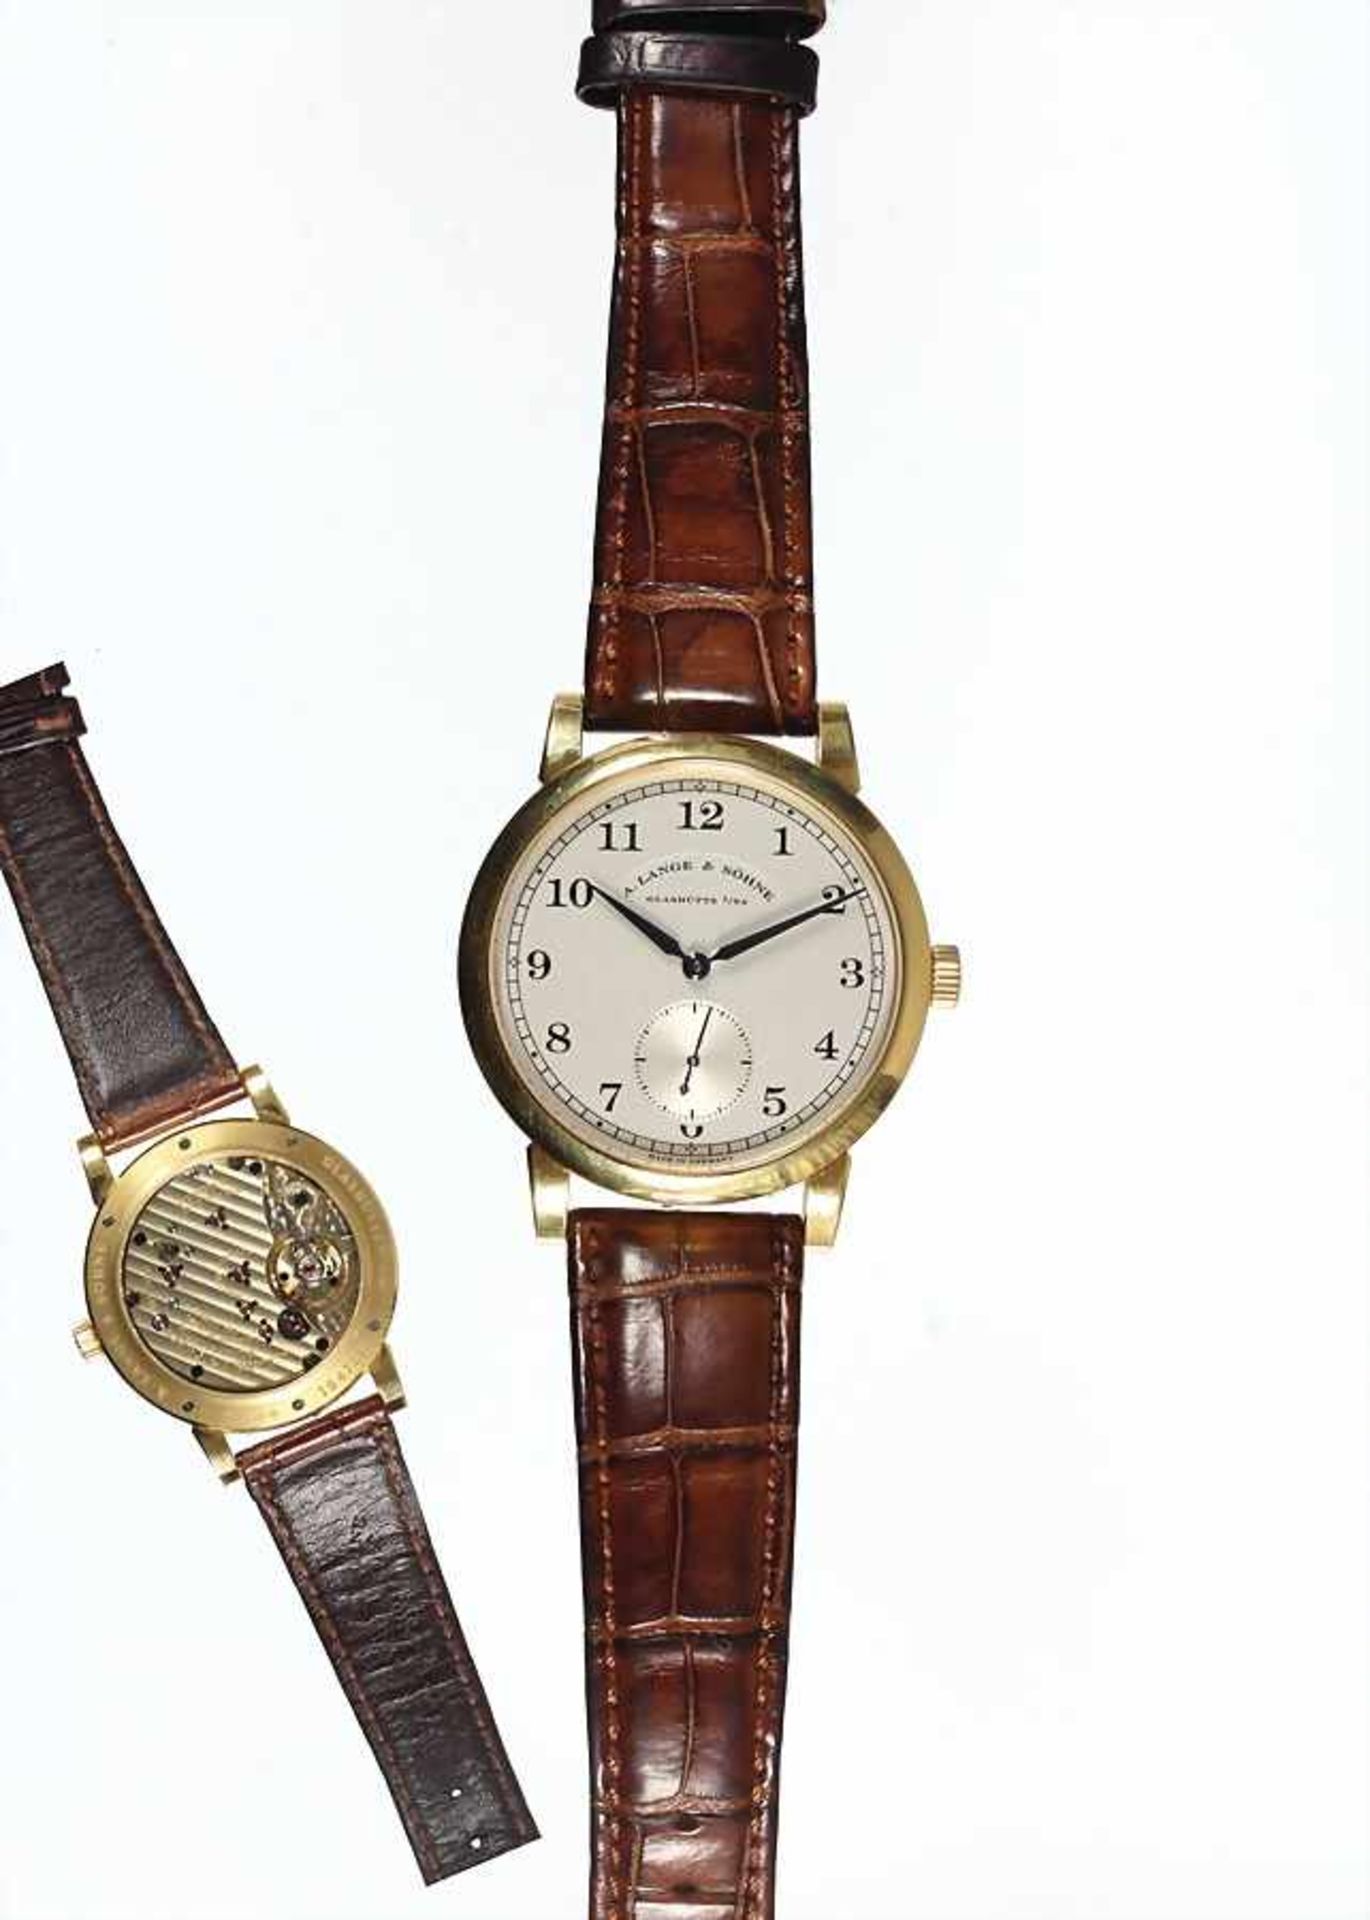 Herren-Armbanduhr, "A. LANGE & SÖHNE 1815" Glashütte, um 2000, Gelbgold 750/000, arab. Zahlen, kl.